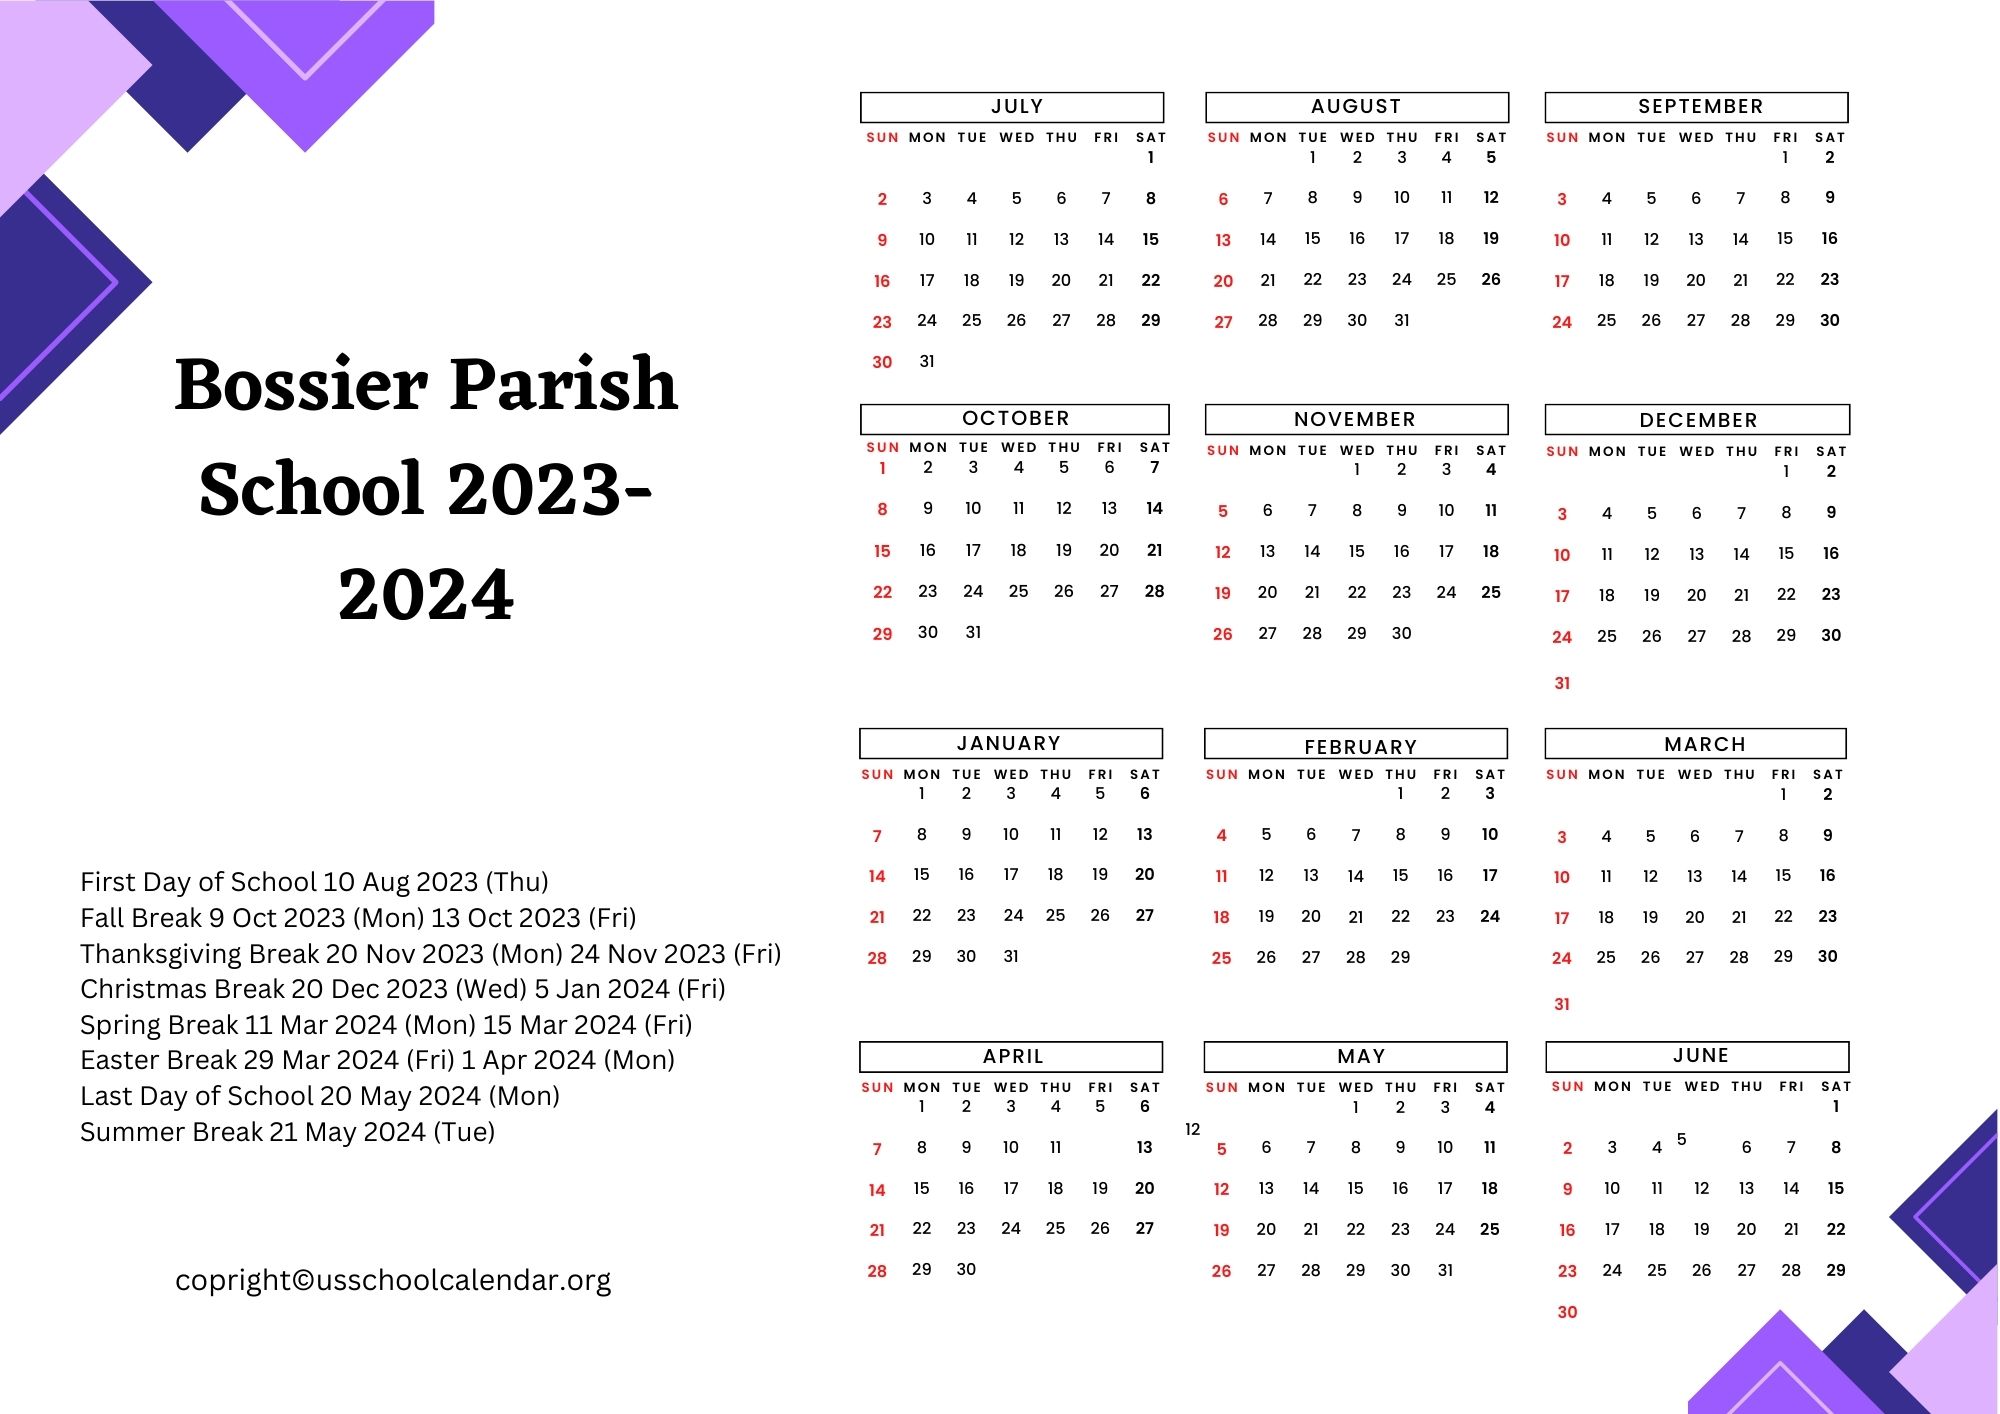 Bossier Parish School Calendar with Holidays 2023-2024